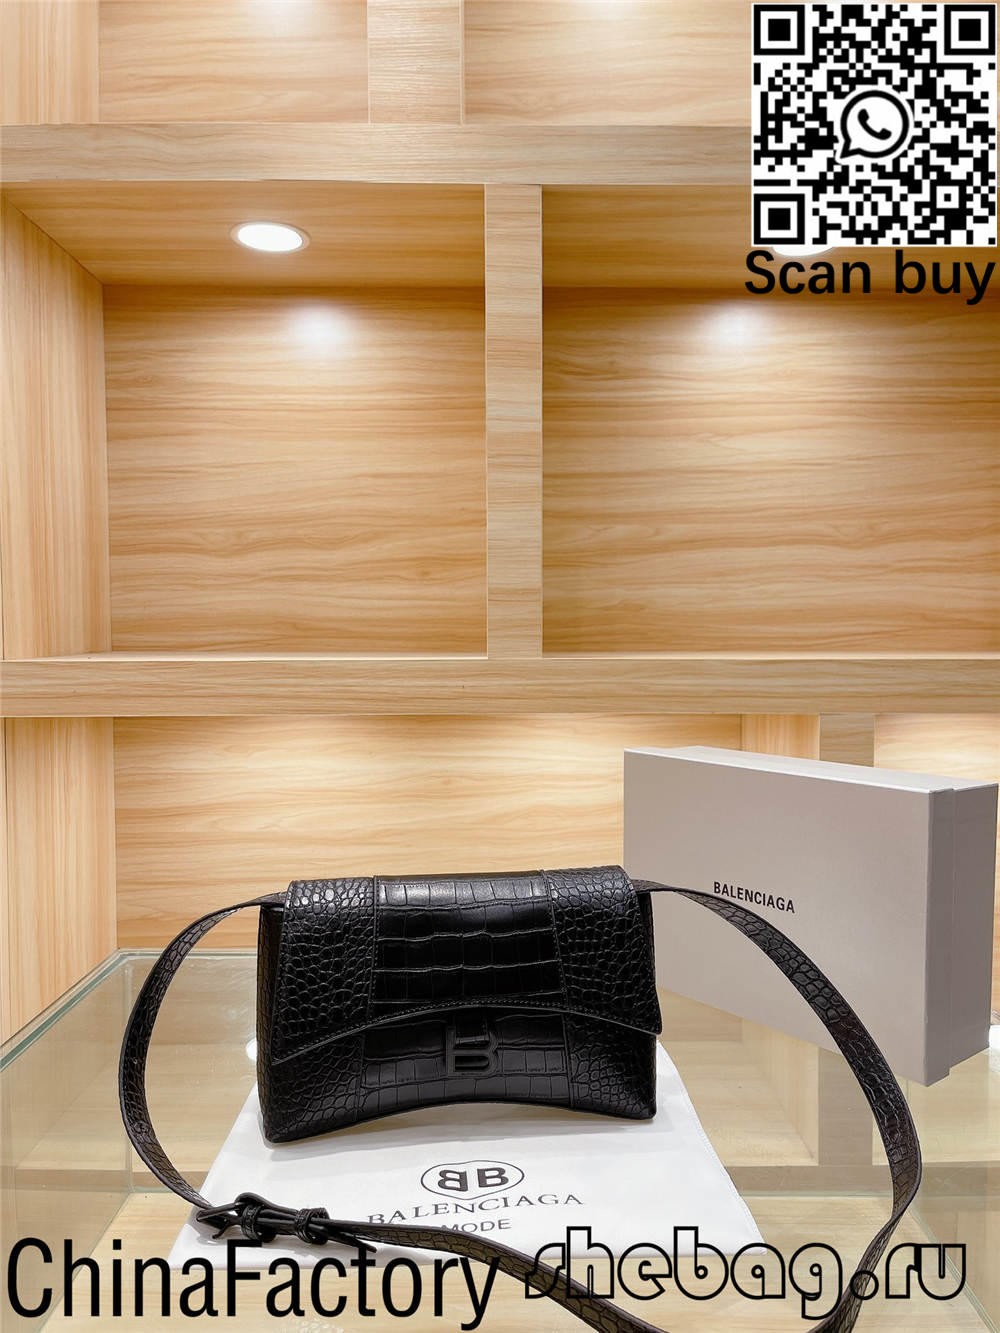 How to buy cheap replica balenciaga bags from Hongkong? (2022 updated)-Best Quality Fake Louis Vuitton Bag Online Store, Replica designer bag ru